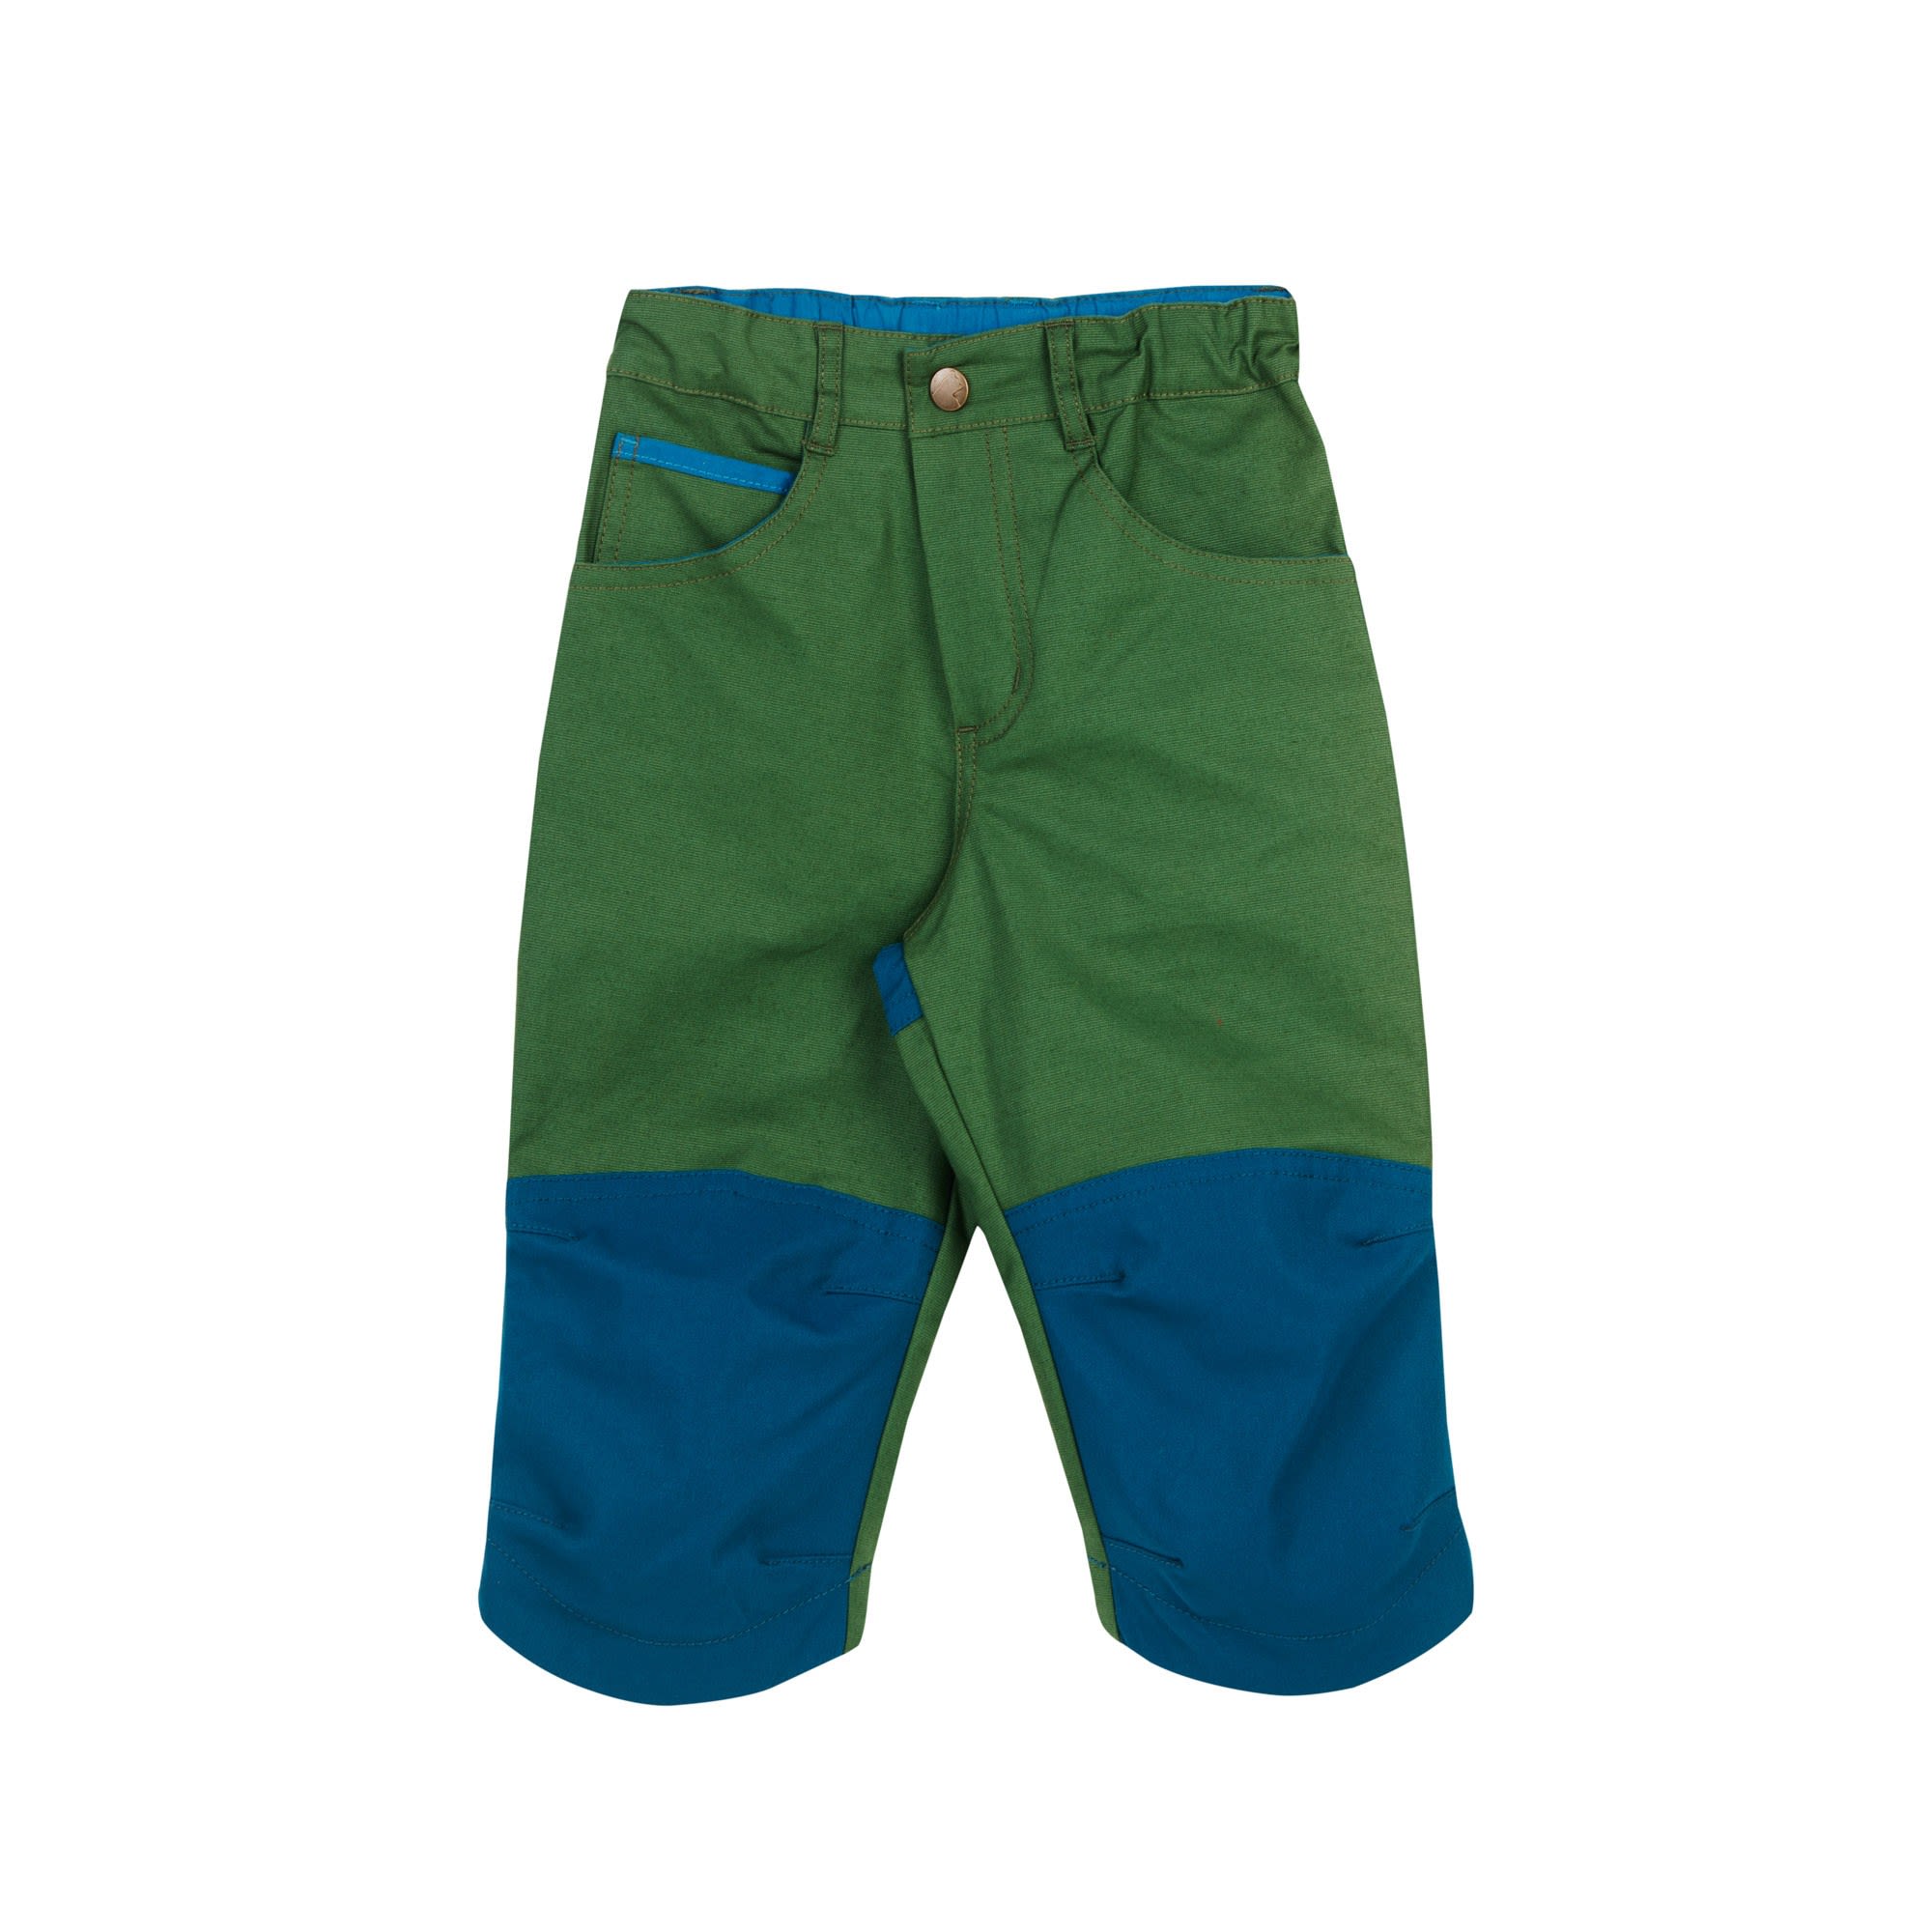 Finkid Kulta Grn- Shorts- Grsse 80 - 90 - Farbe Bronze Green unter Finkid